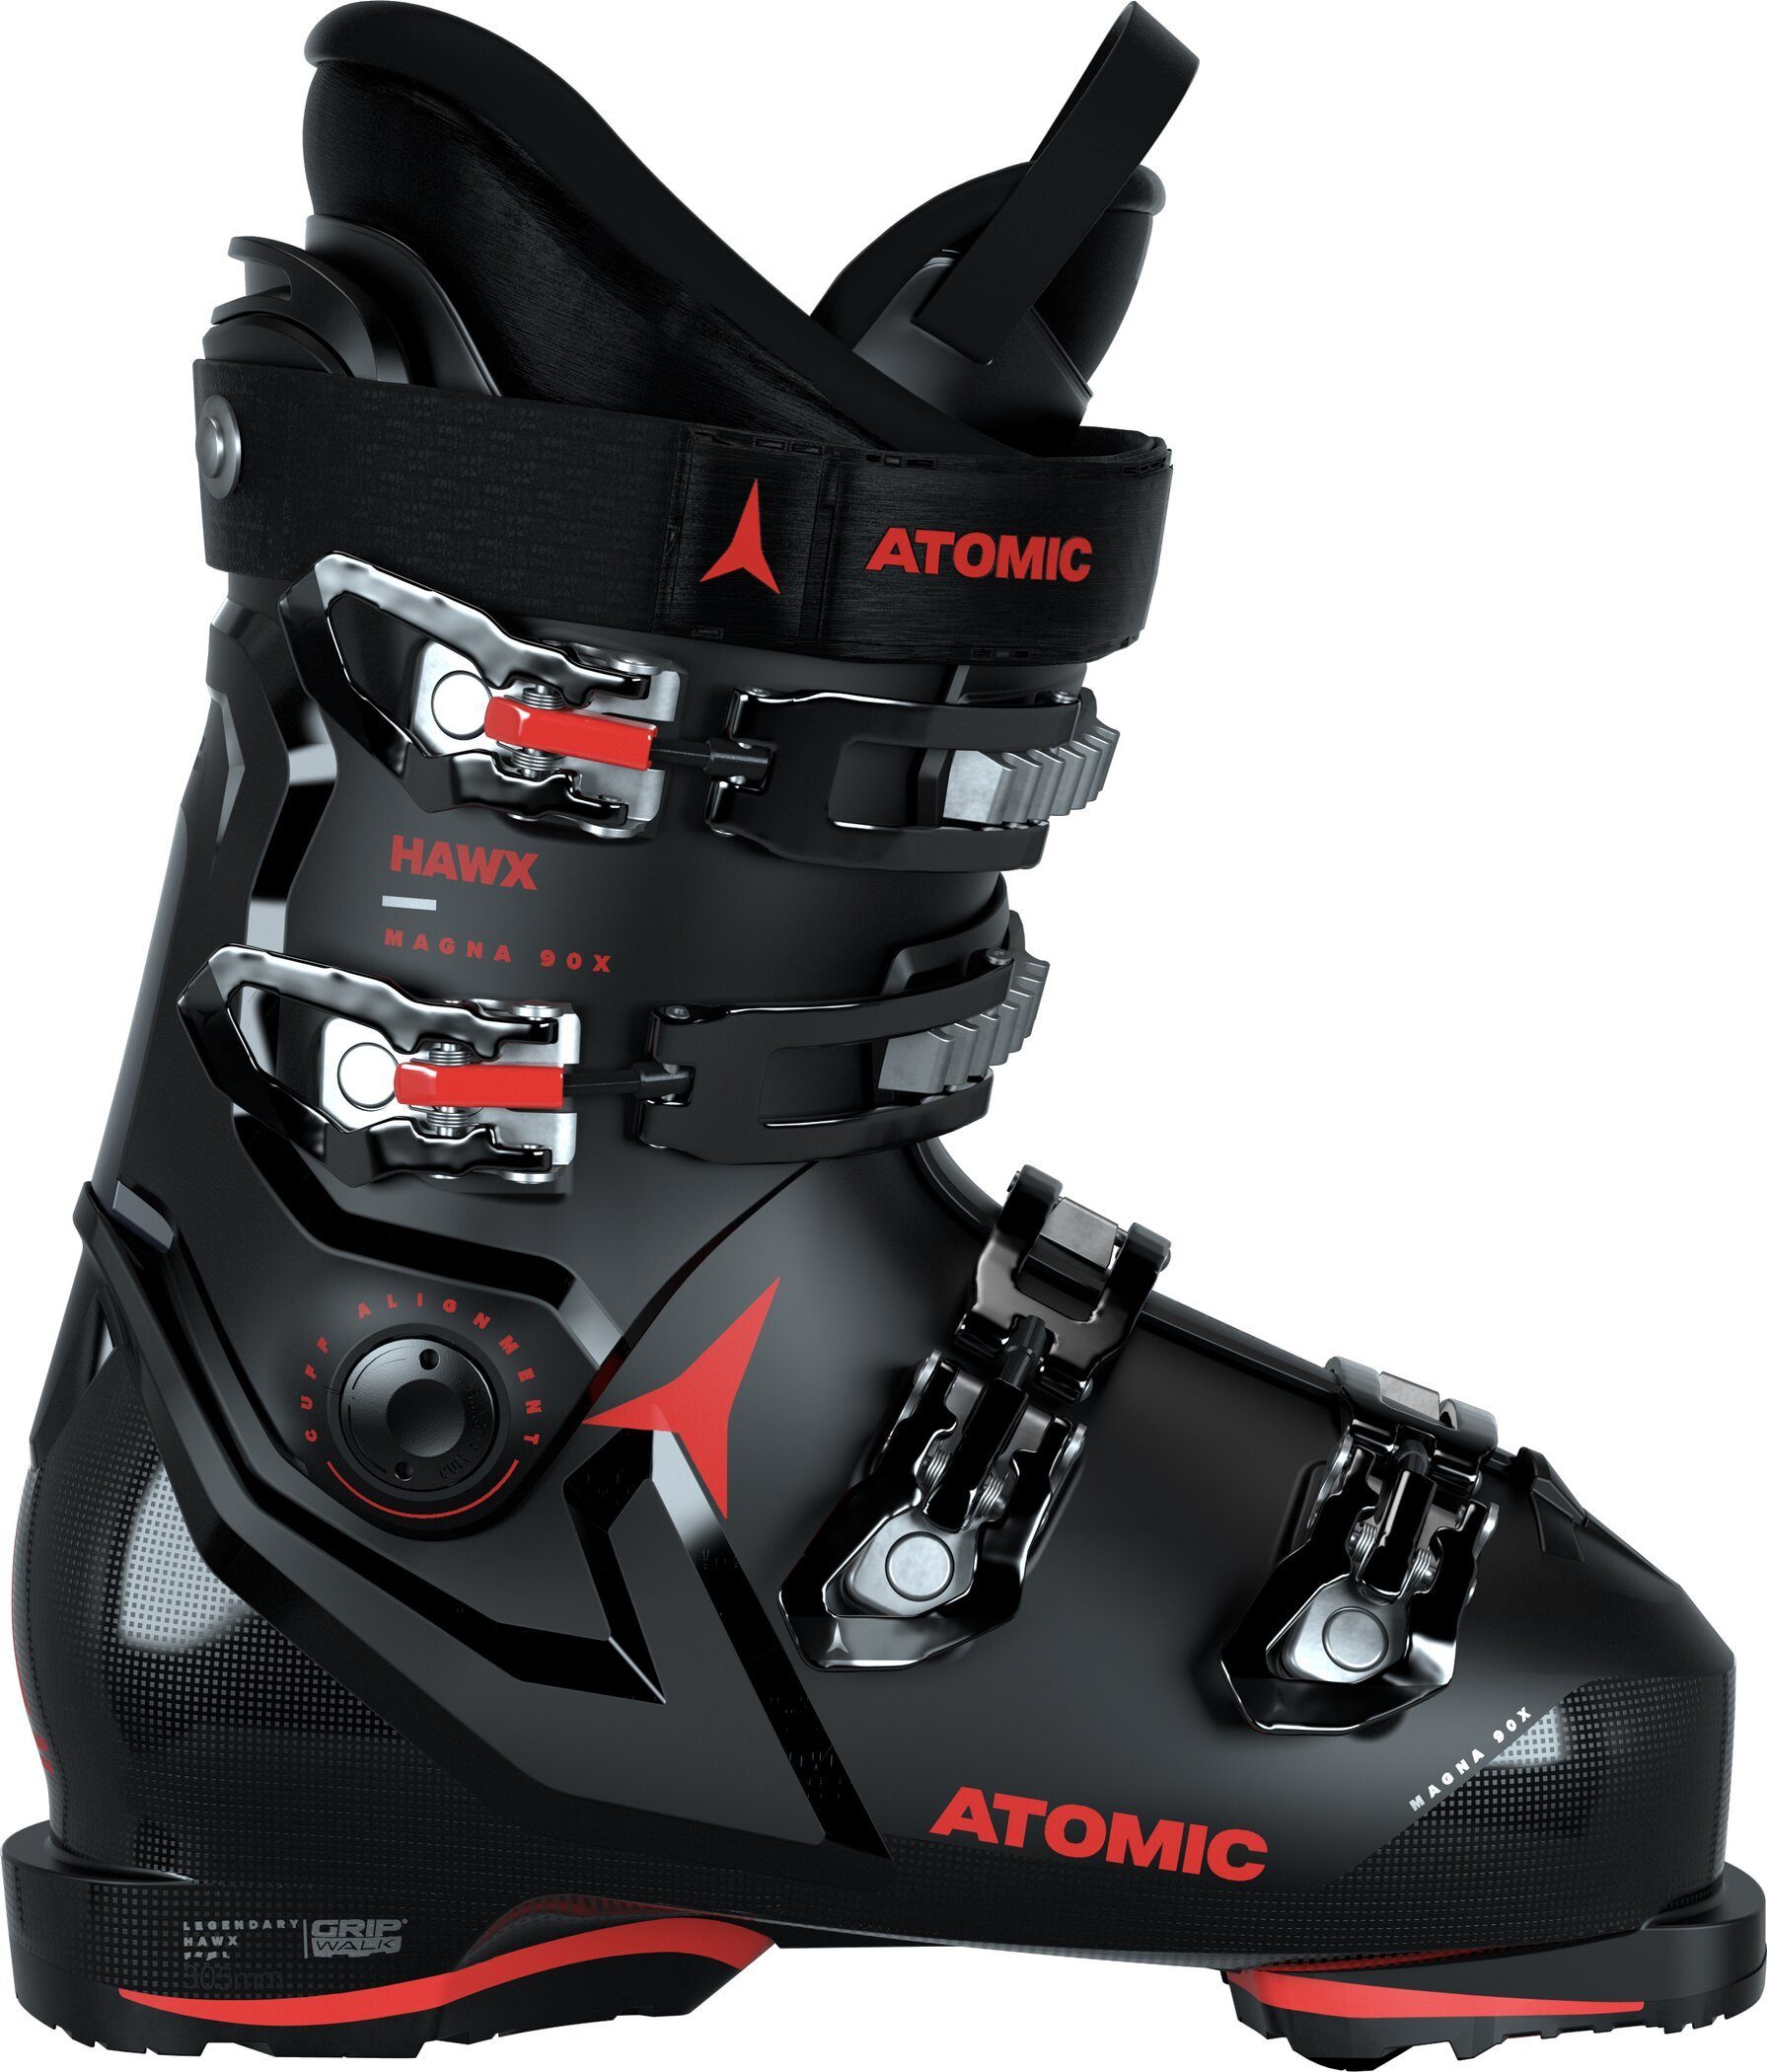 Atomic HAWX MAGNA 90X GW BLAC BLACK/ Skischuh BLACK/RED/